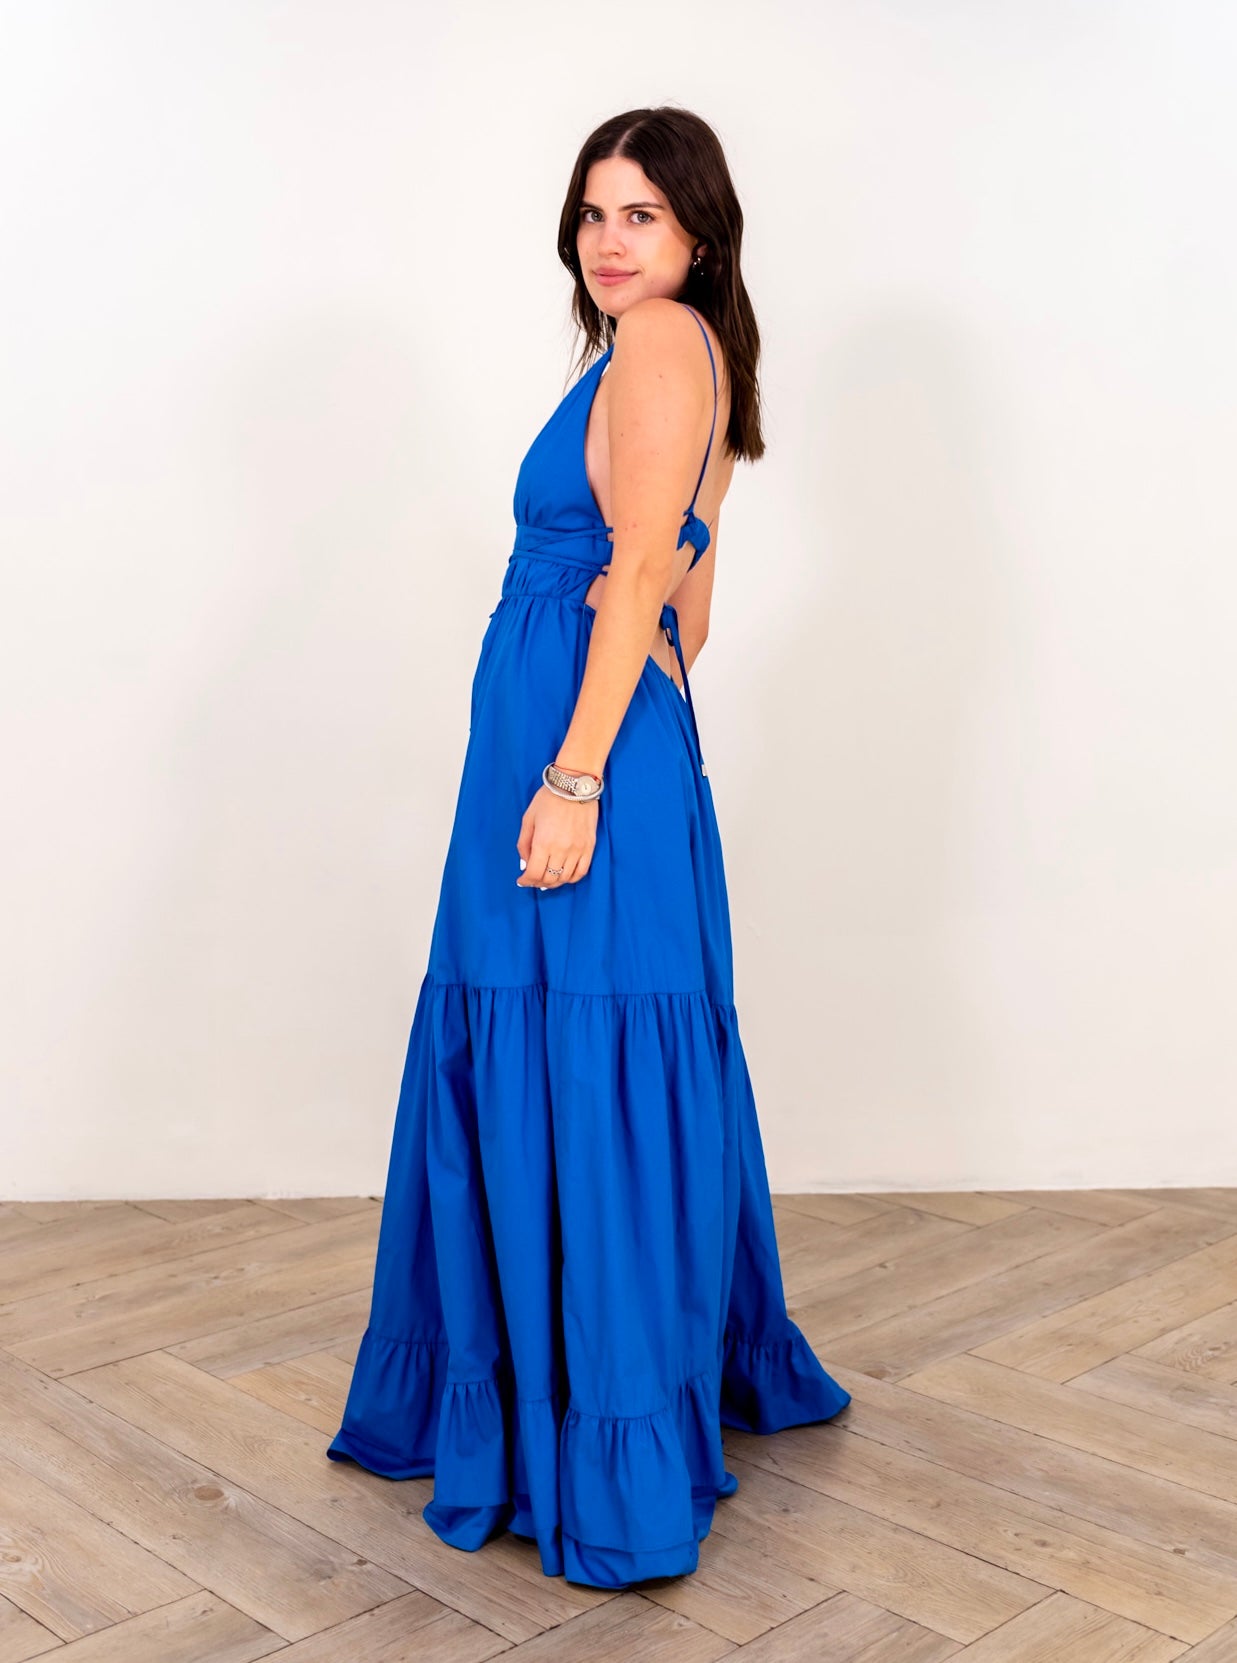 Royal Blue Cotton Poplin Summer Dress